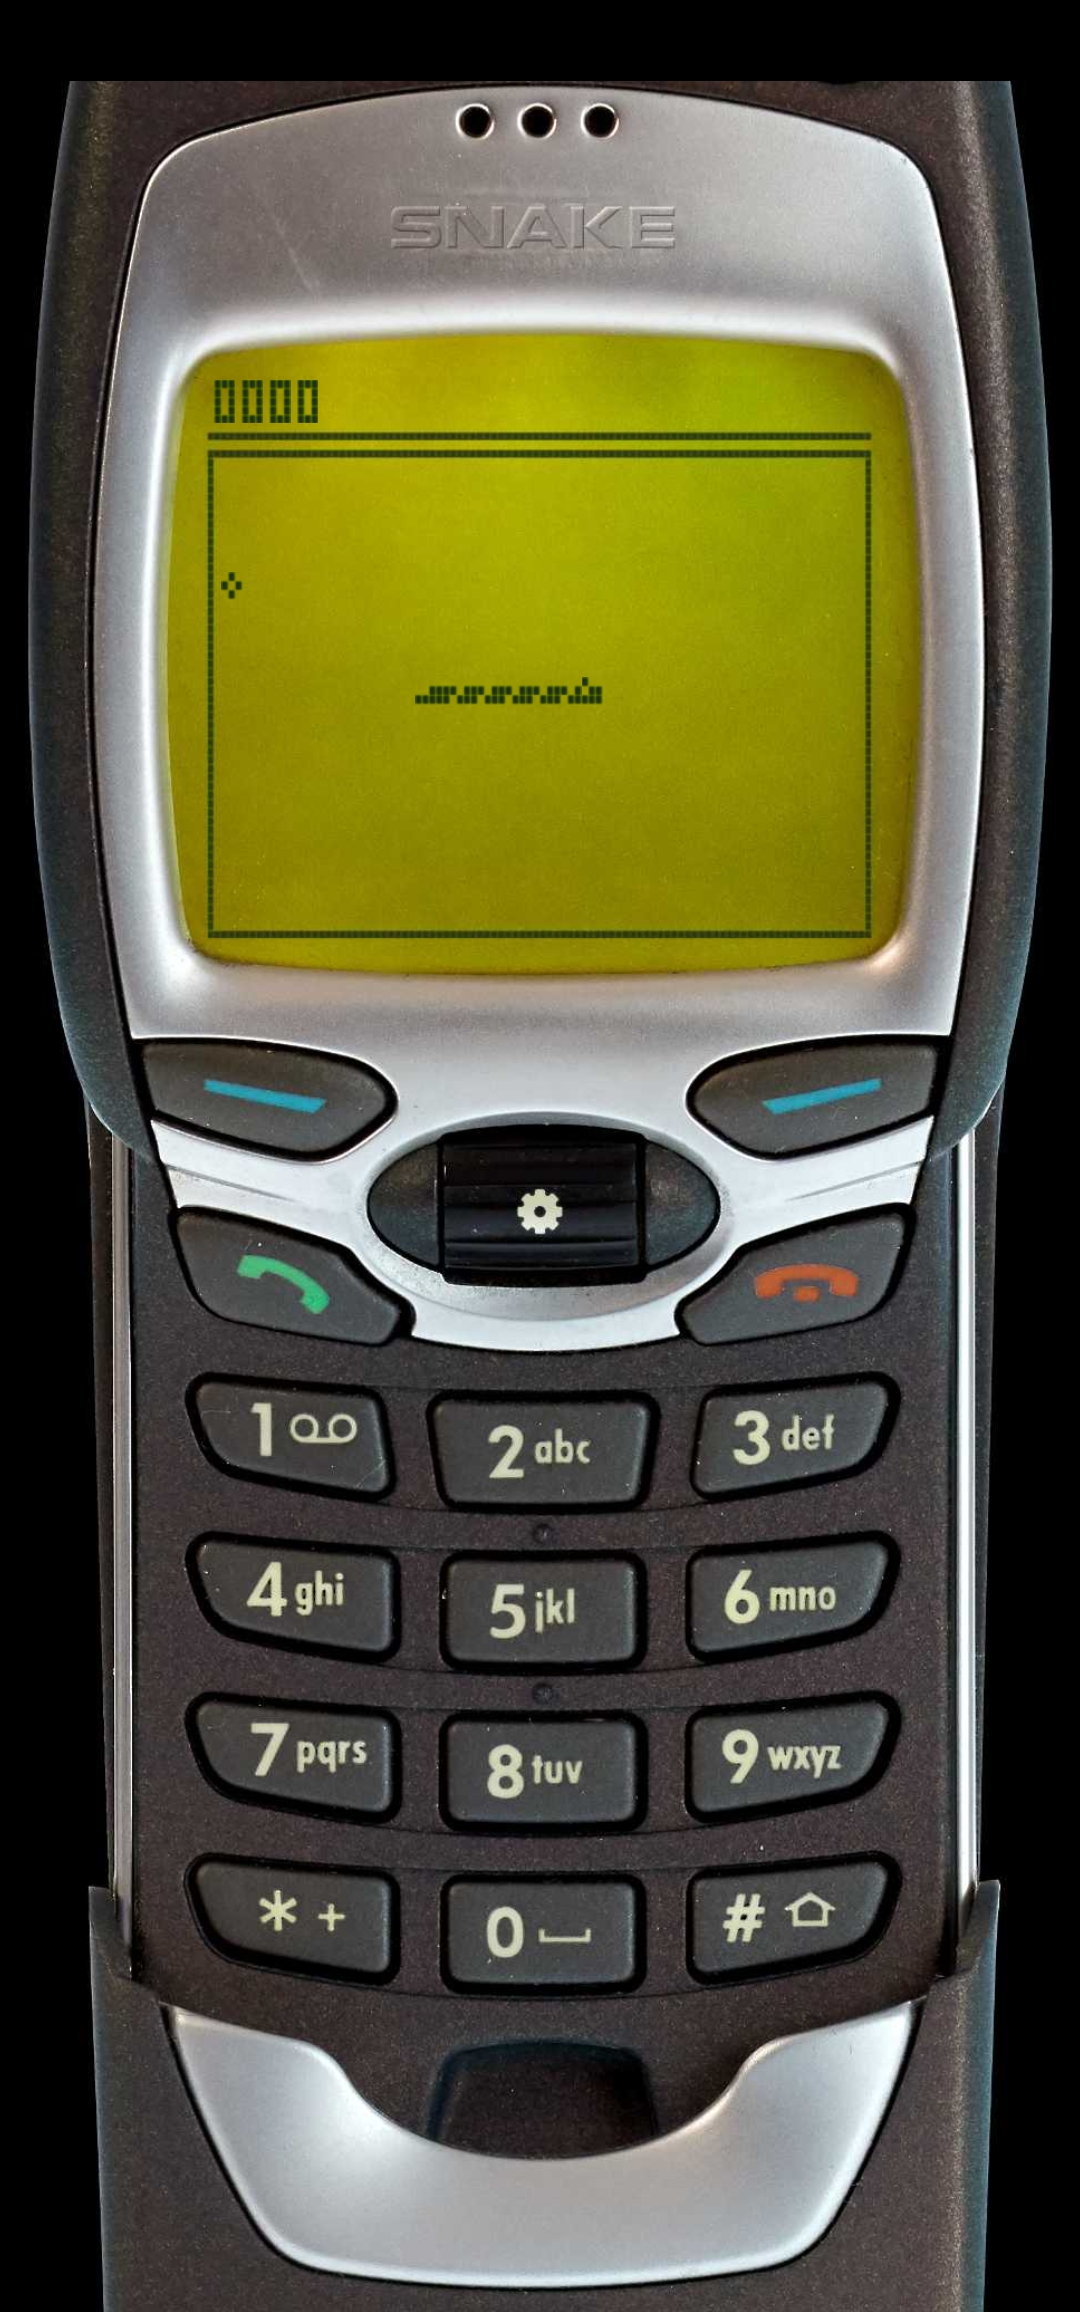 Snake \'97: retro phone classic(MOD)